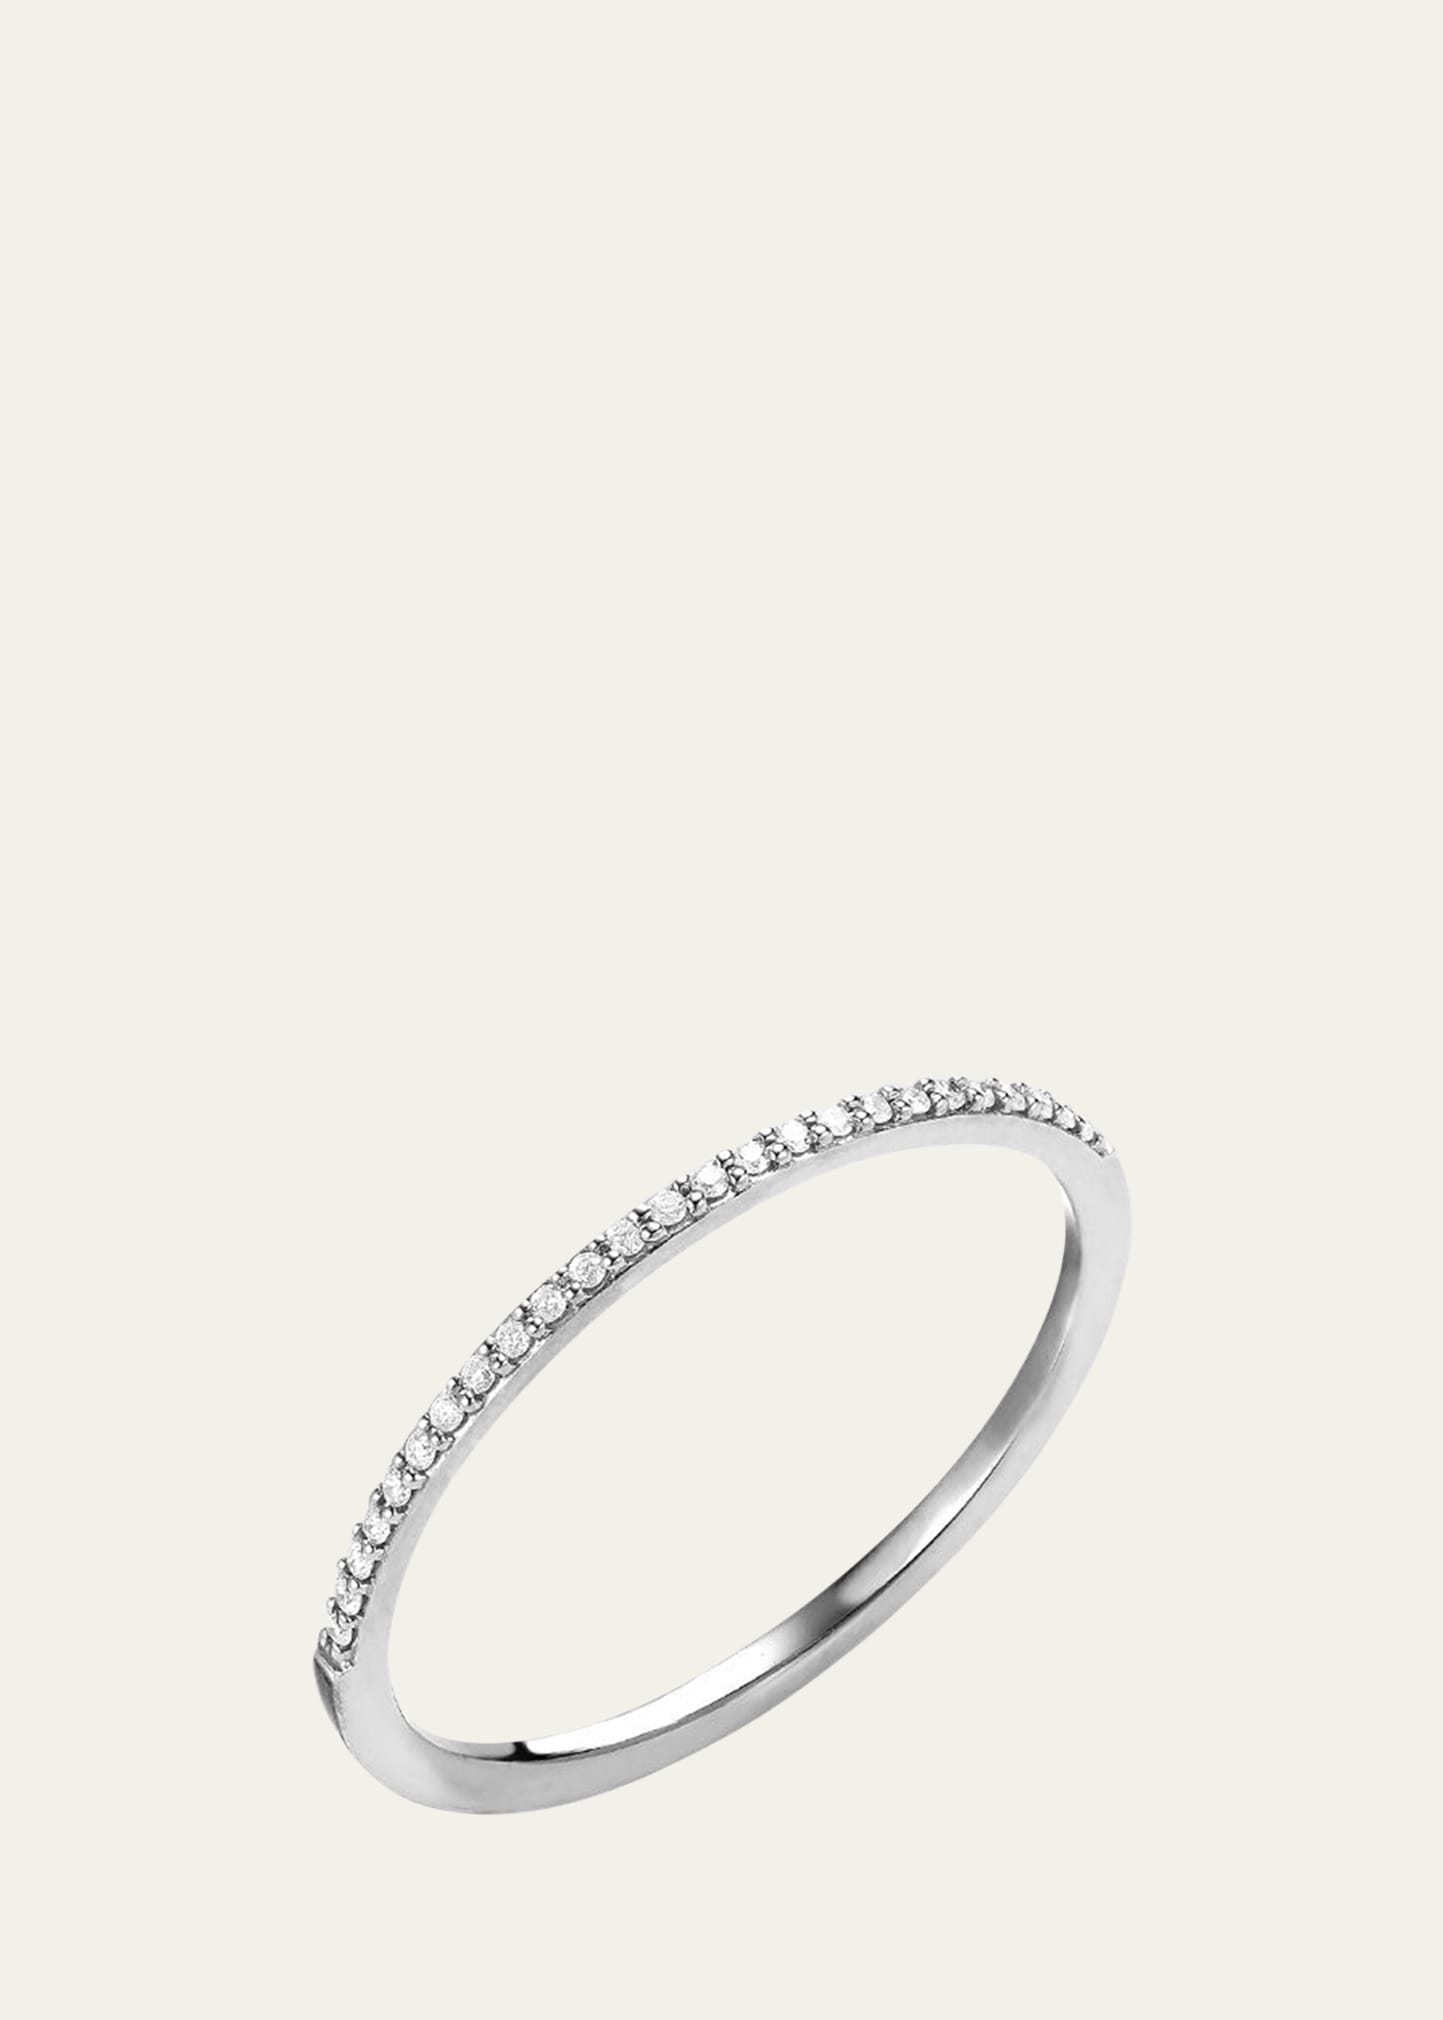 LANA JEWELRY 14k Gold Thin Flawless Diamond Stack Ring